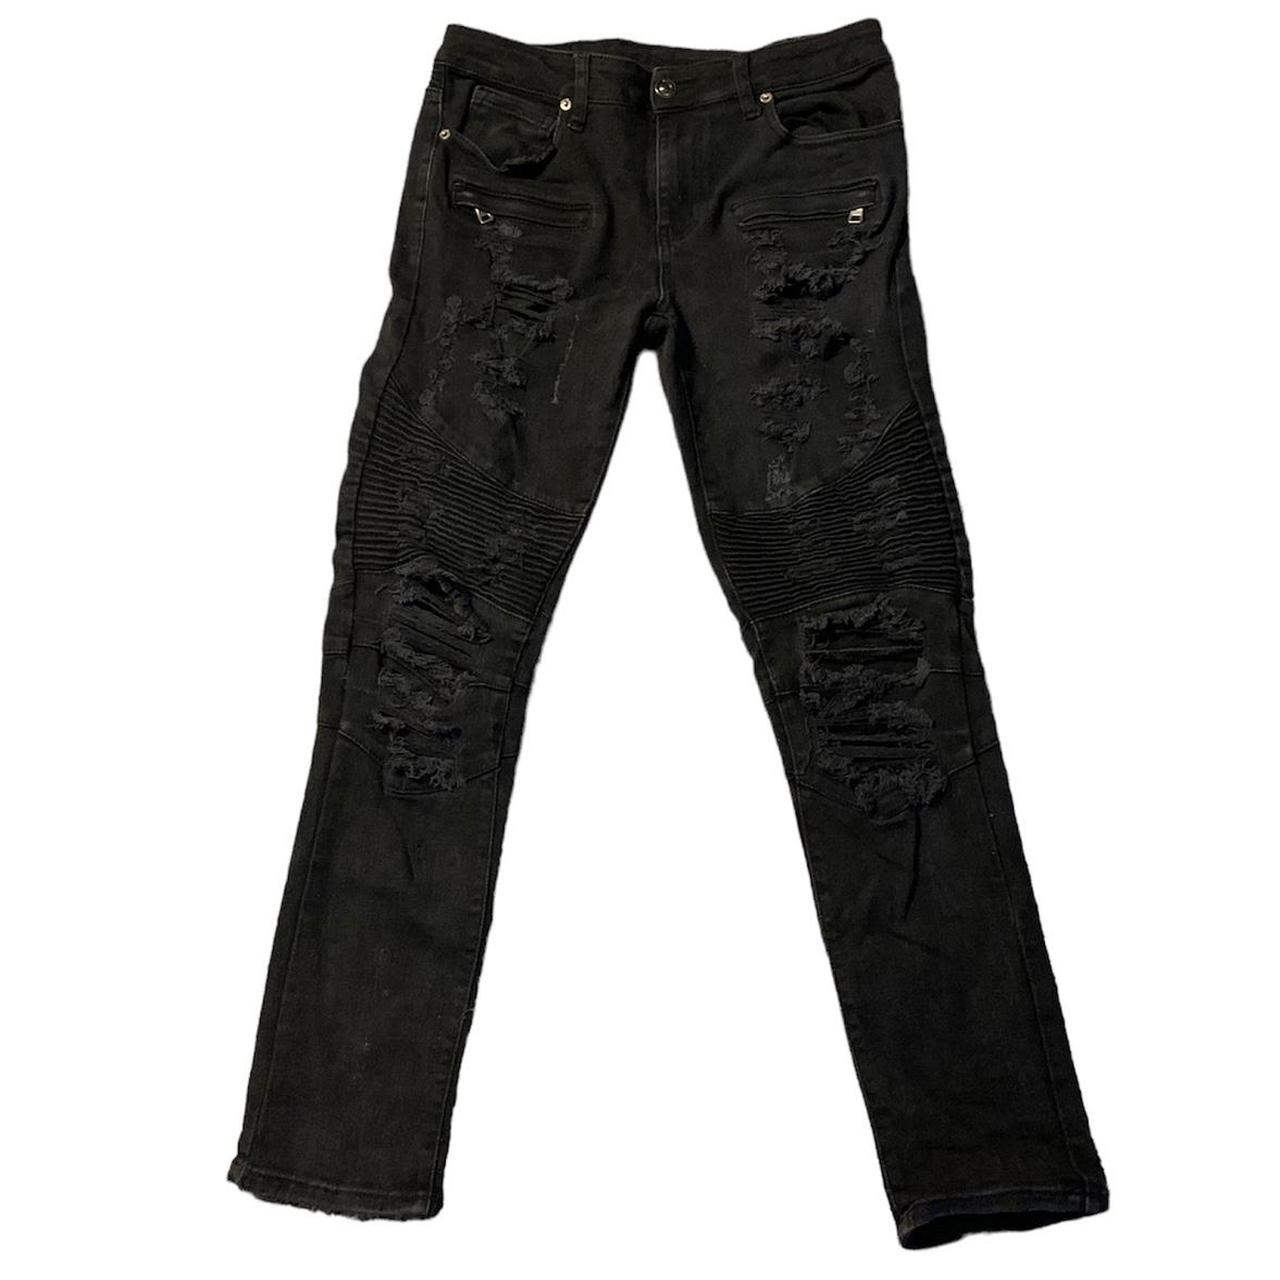 Men's Rue 21 Black Brand Jeans, size 34/30 long, p… - Gem